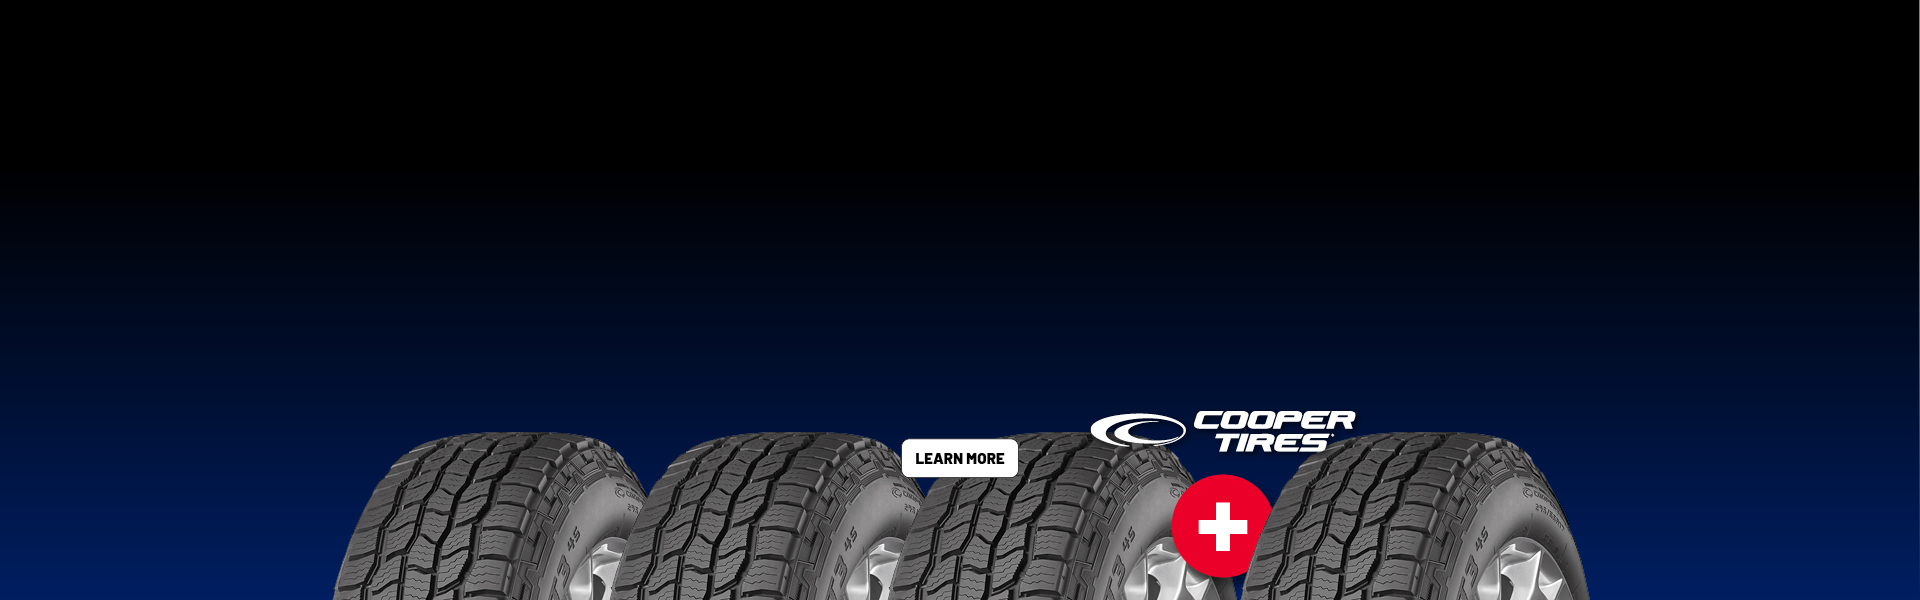 Cooper tires buy 3 get 1 free promo - click for details